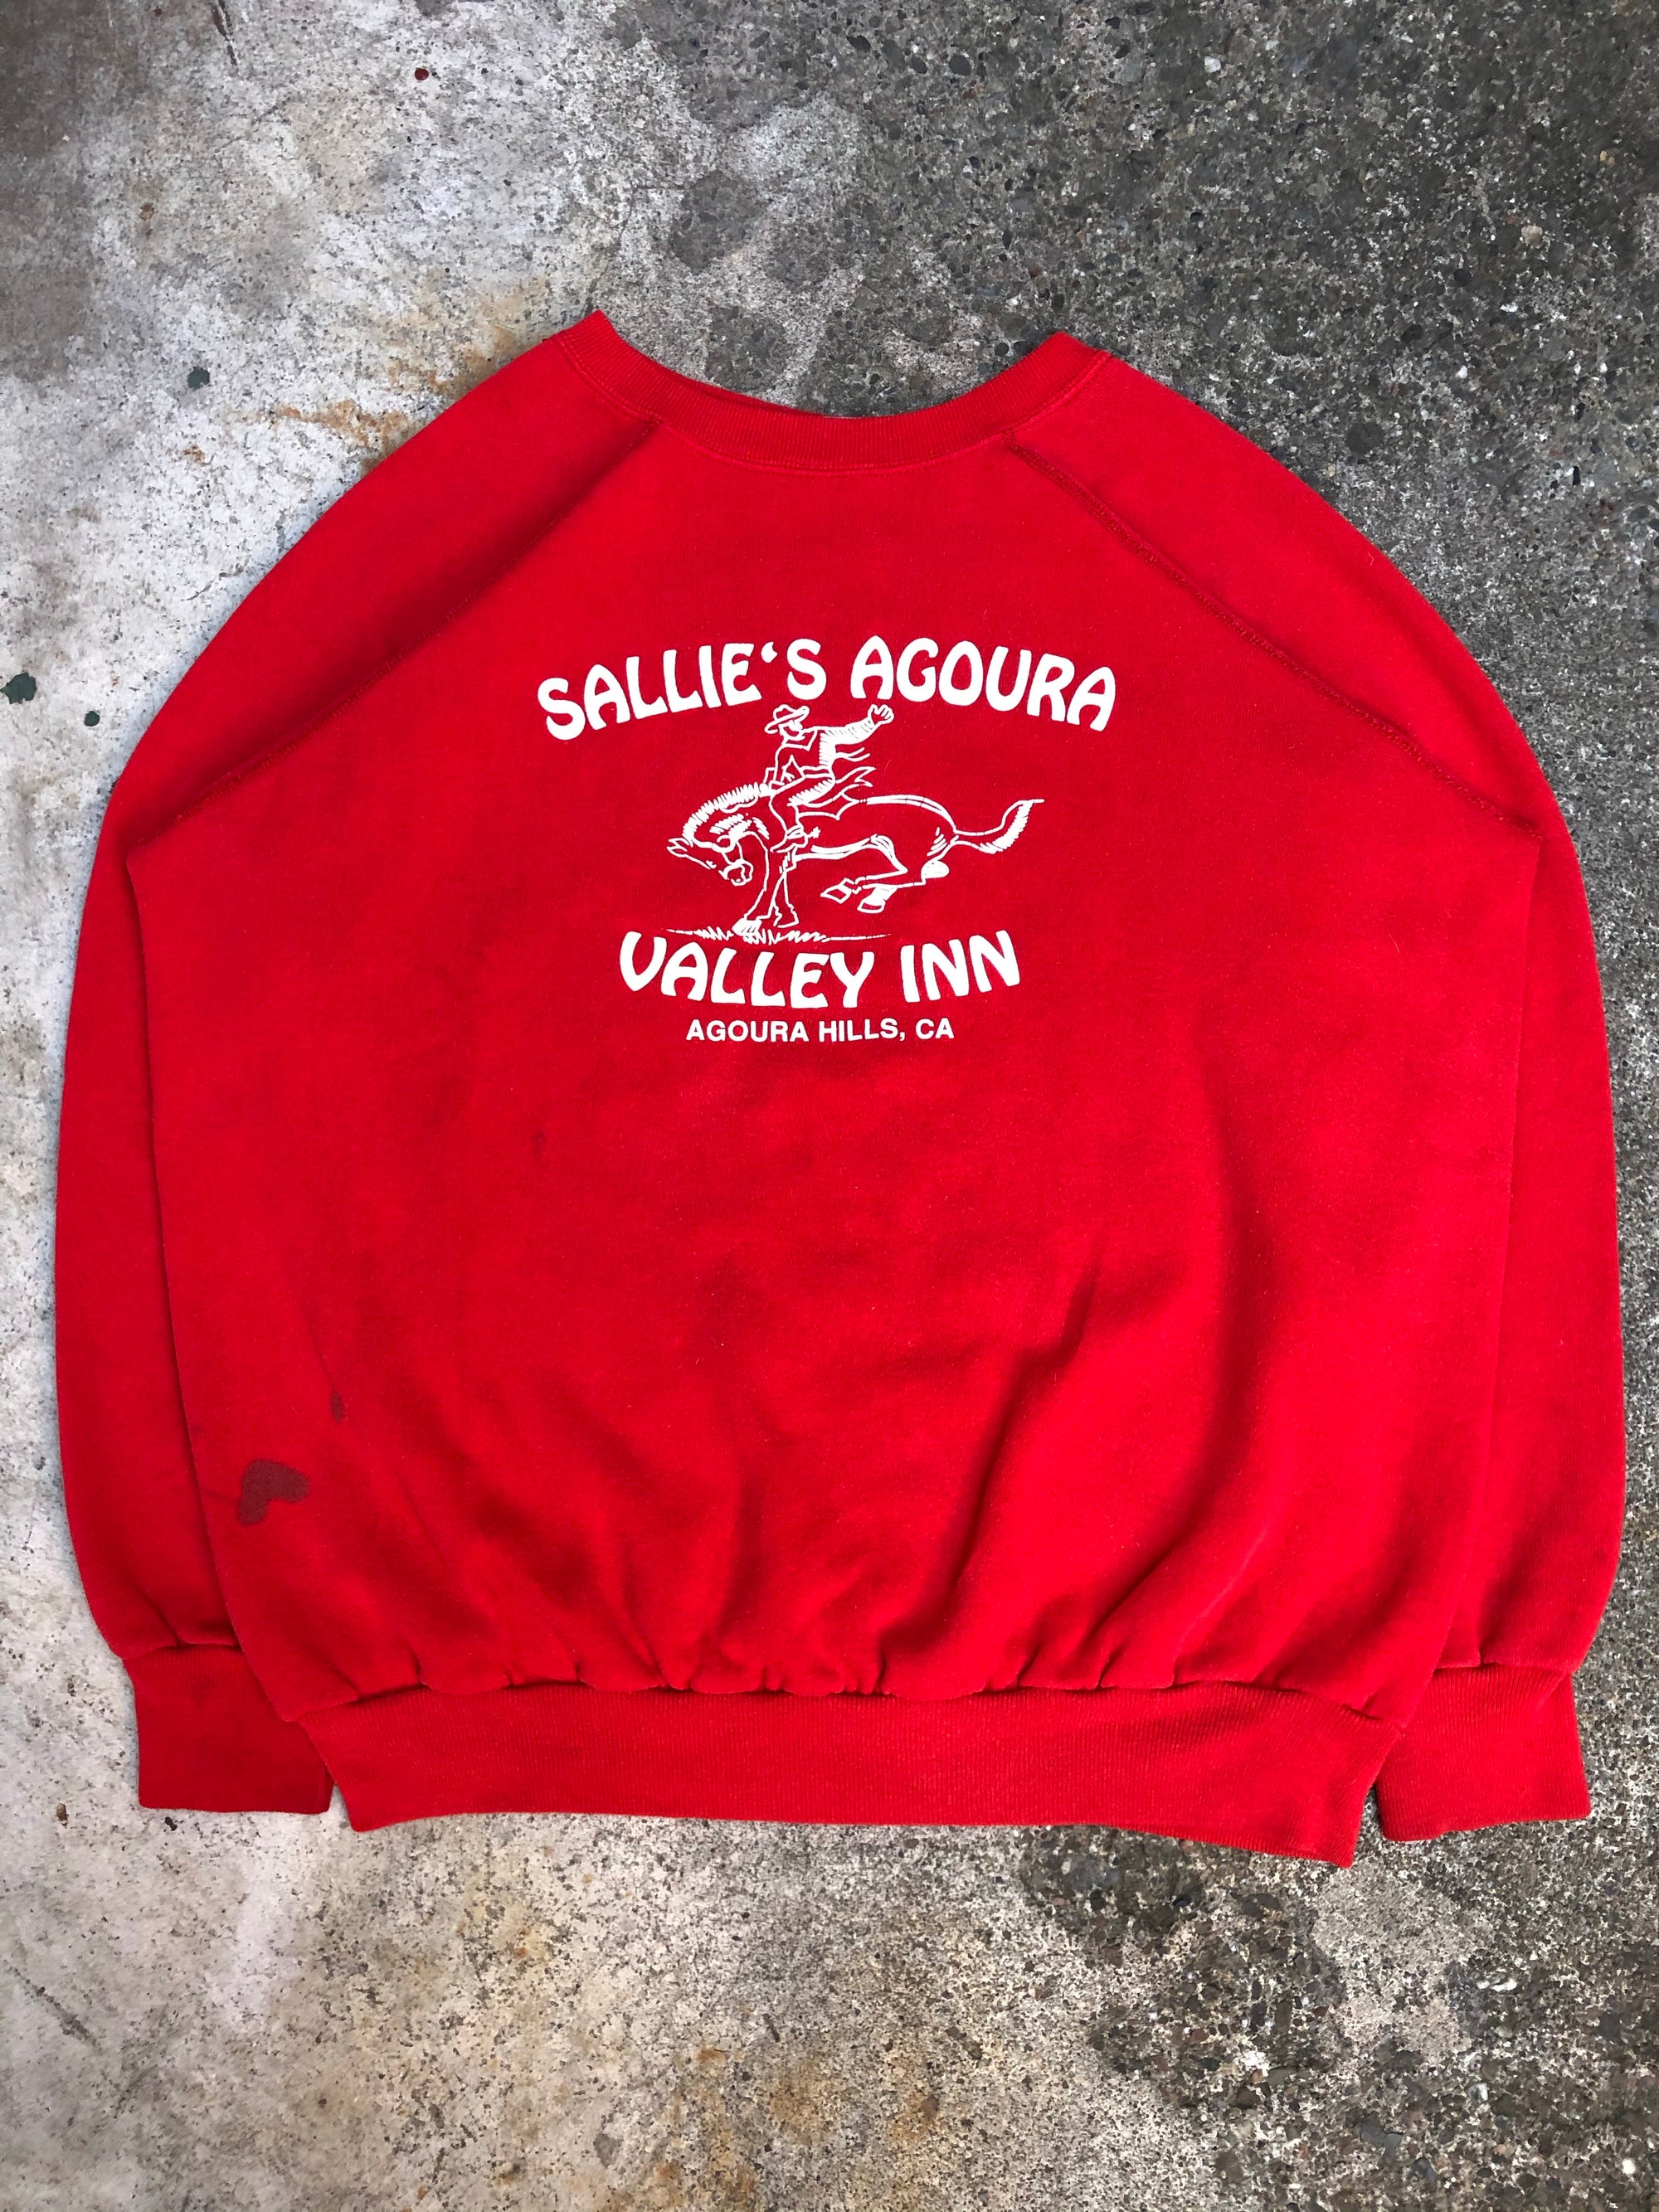 1990s Red “Sallie’s Aguora Valley Inn” Raglan Sweatshirt